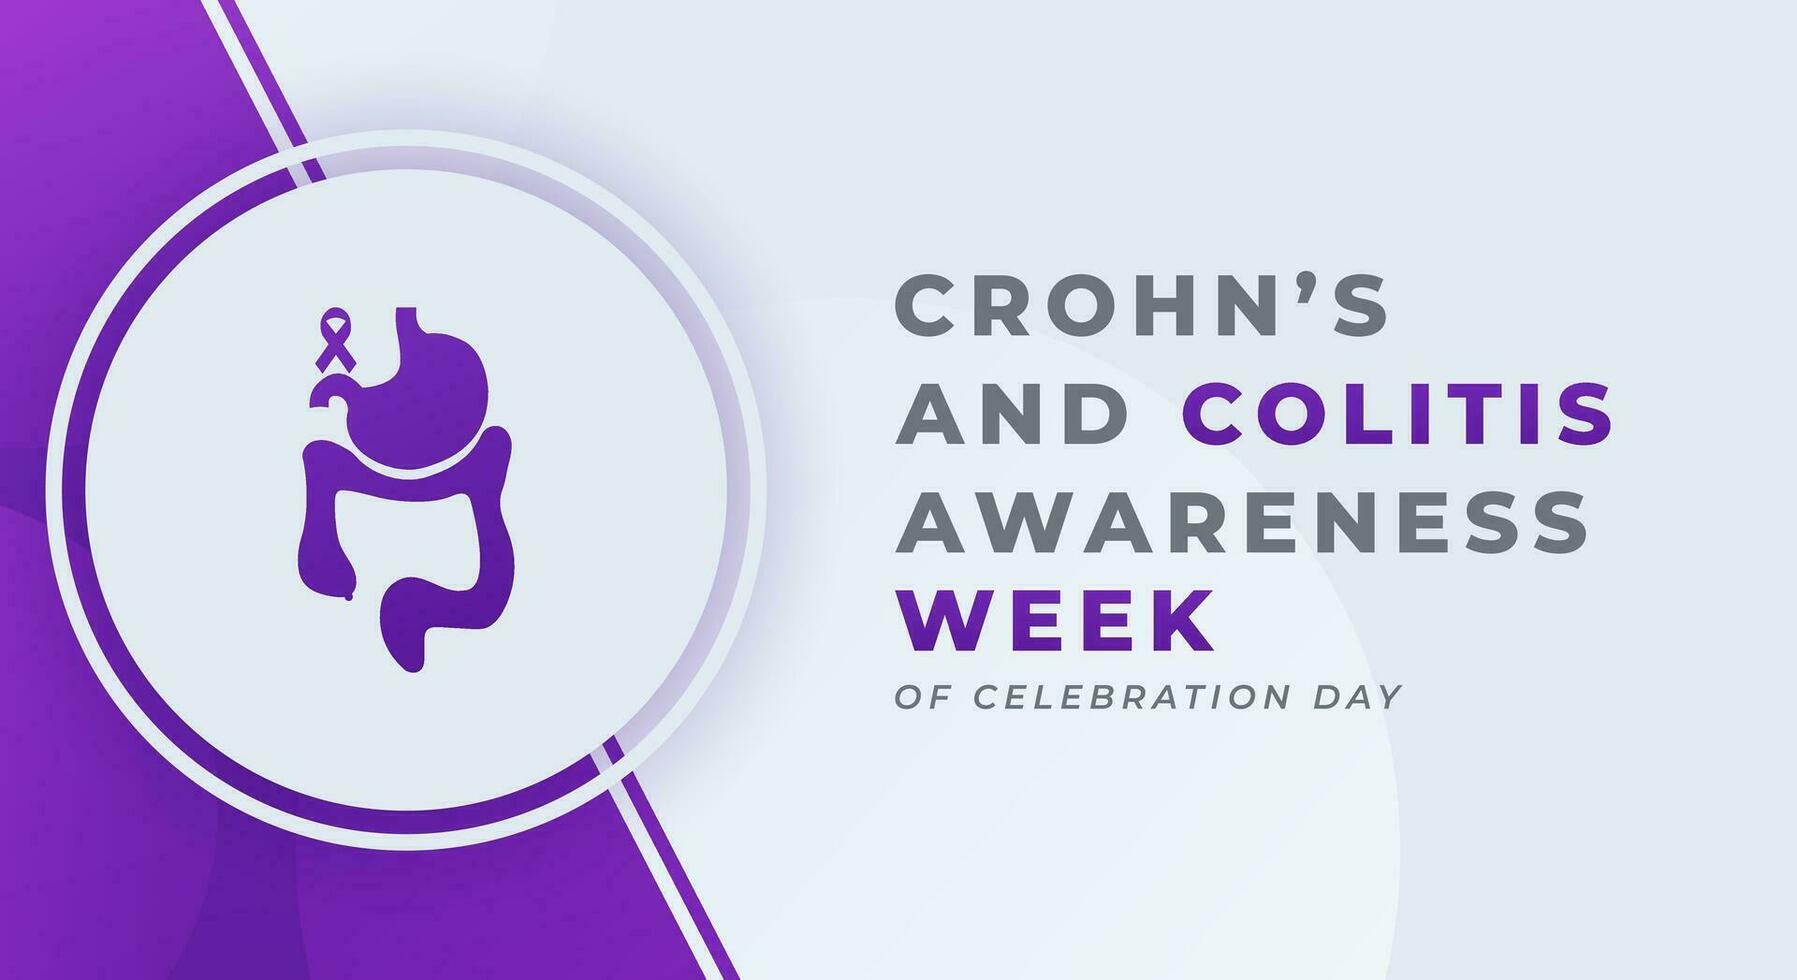 Crohn's and Colitis Awareness Week